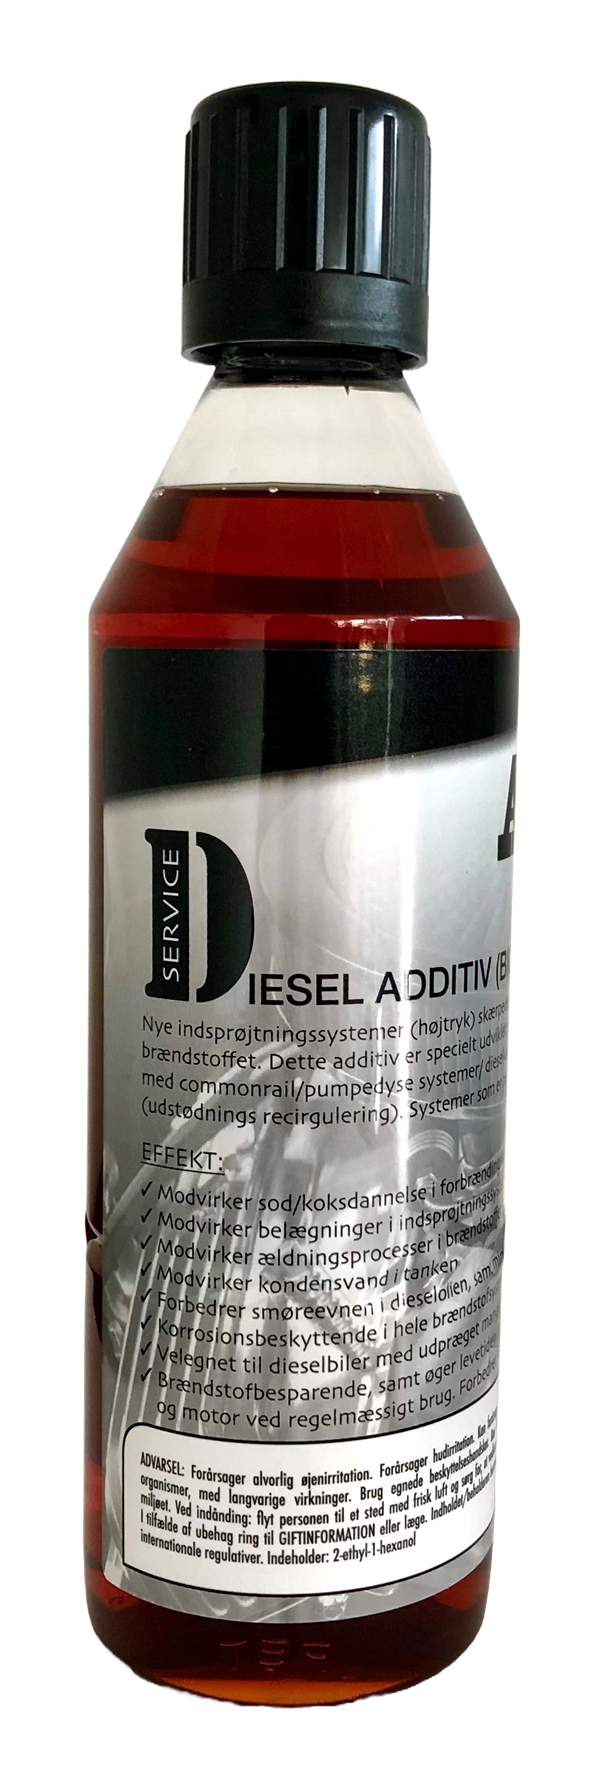 AD3320 - Diesel Additiv